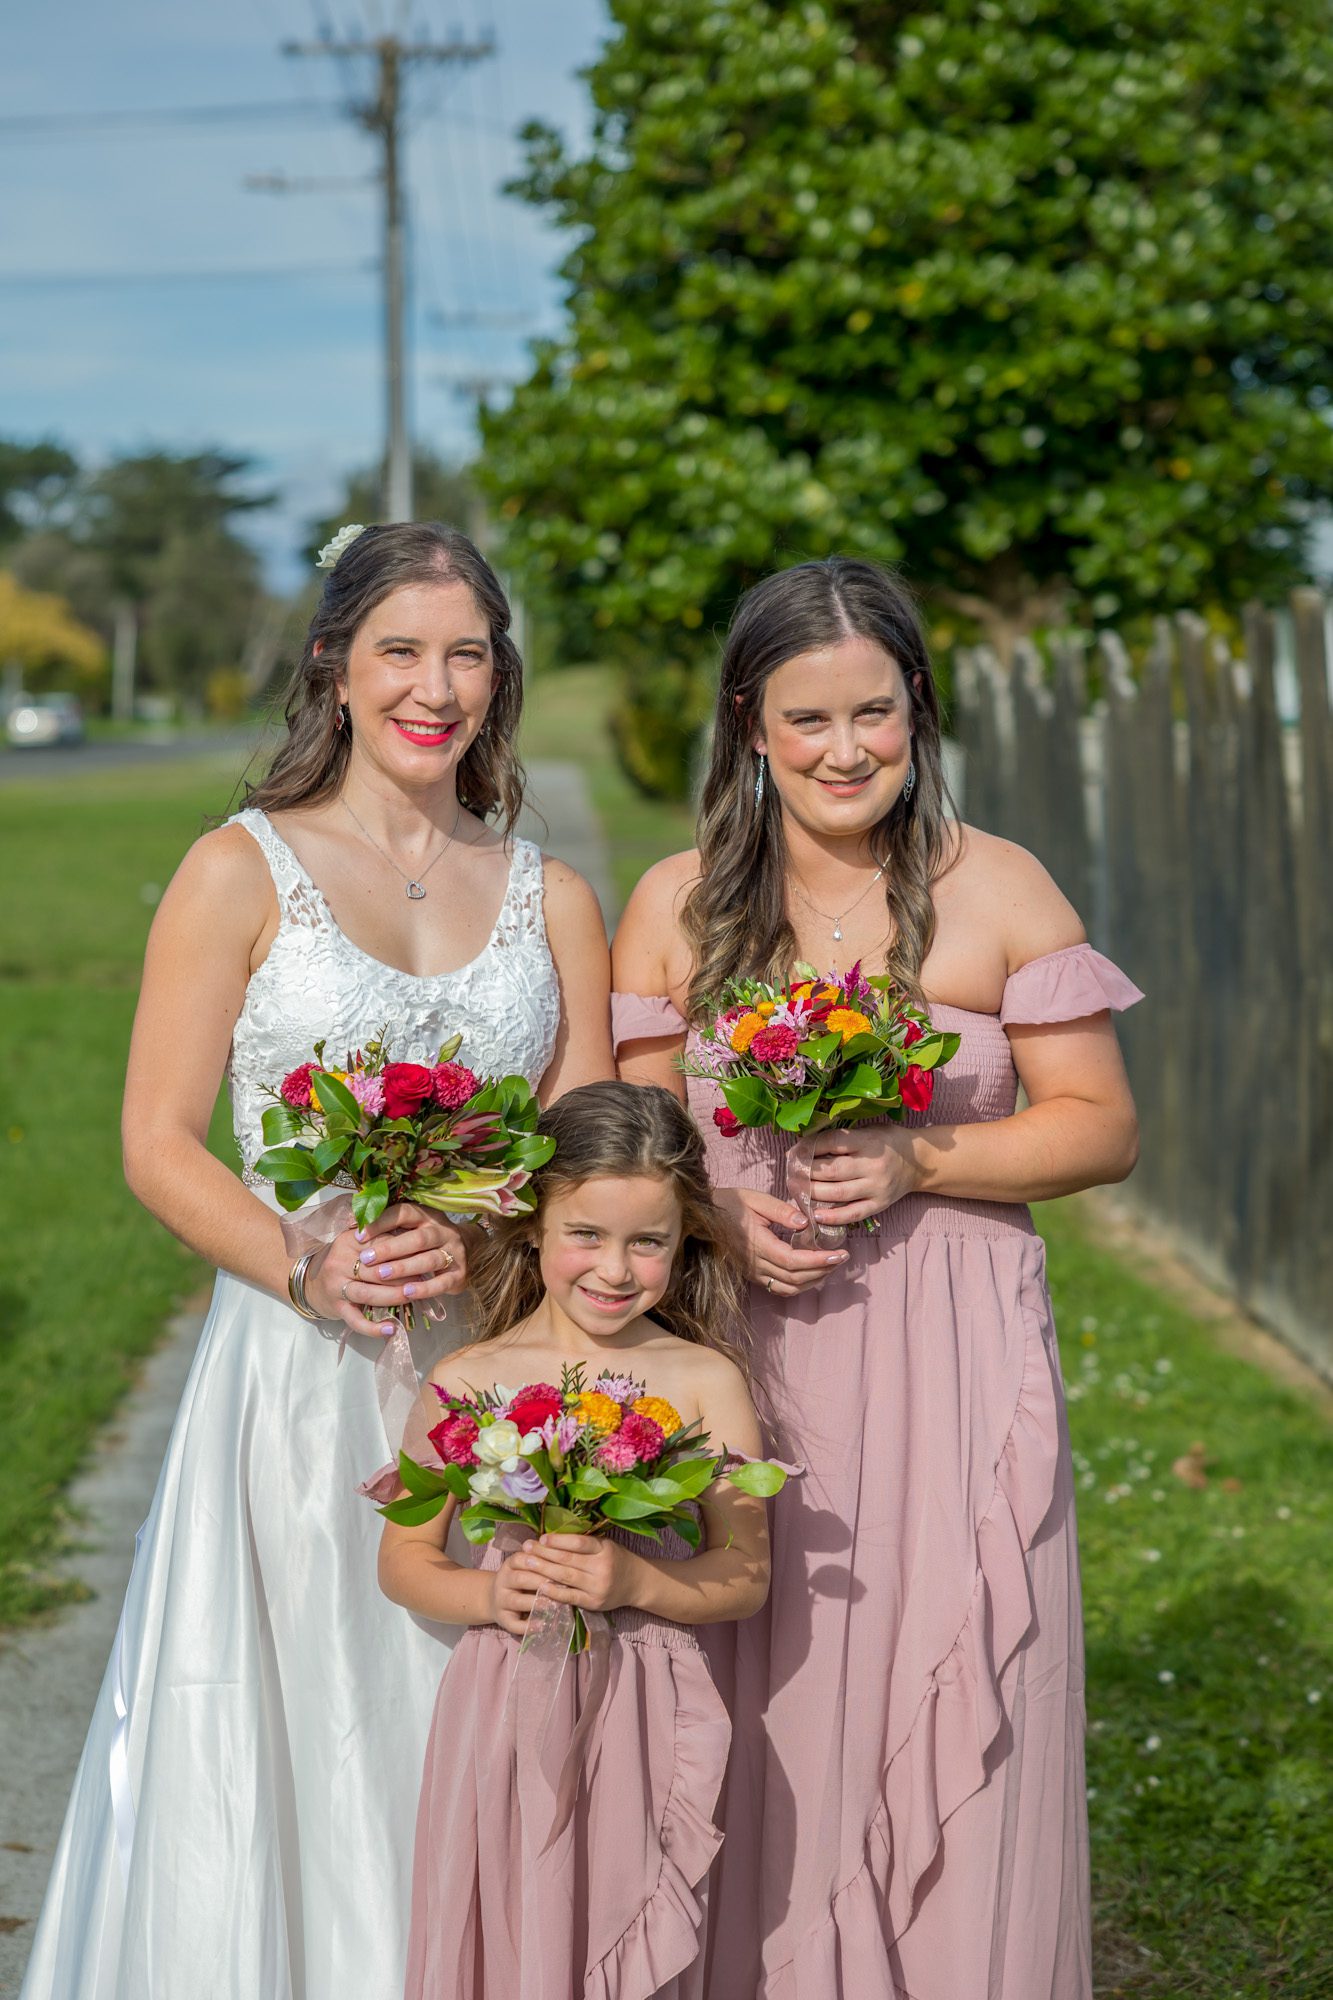 Wellington Wedding Photography: Capture Your Love Story